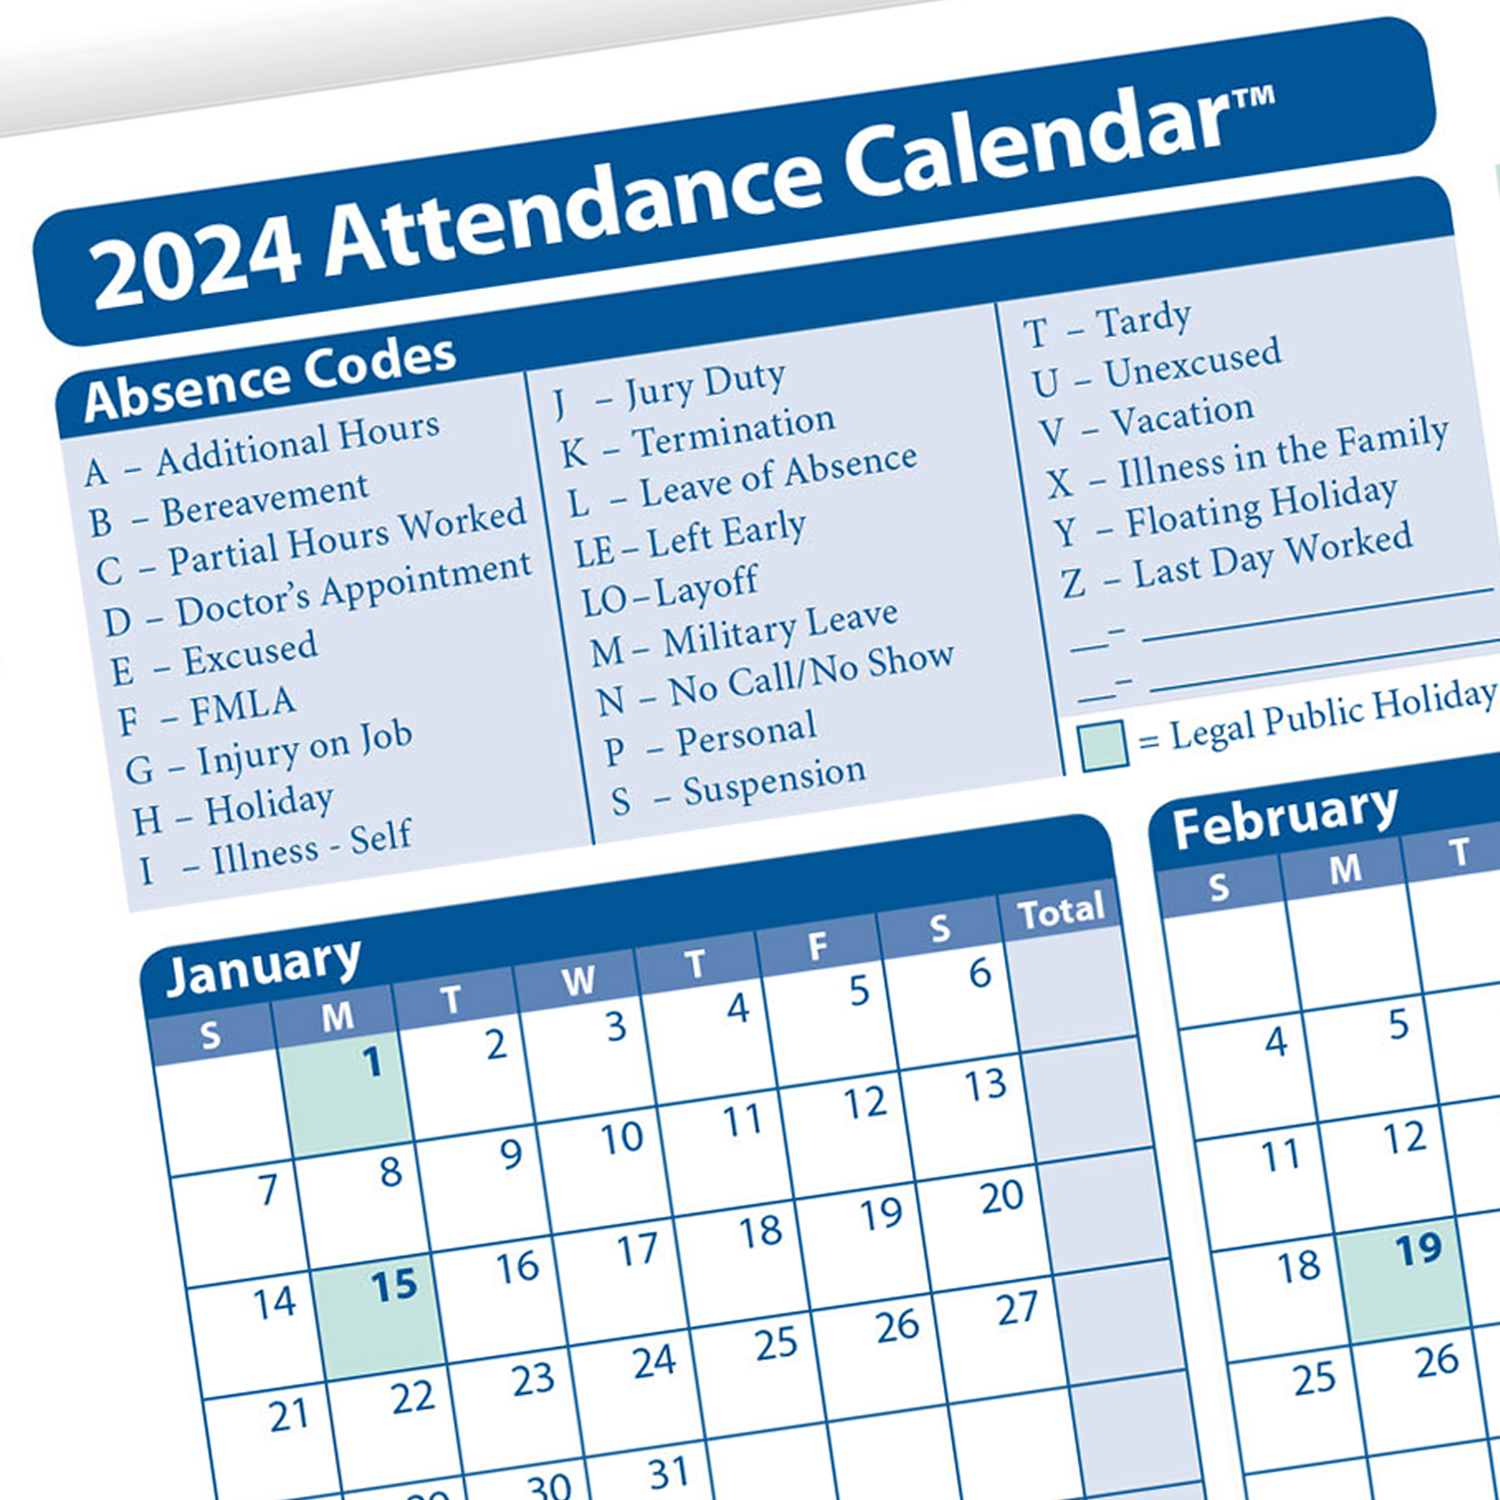 Printable 2024 Employee Attendance Calendar Image to u